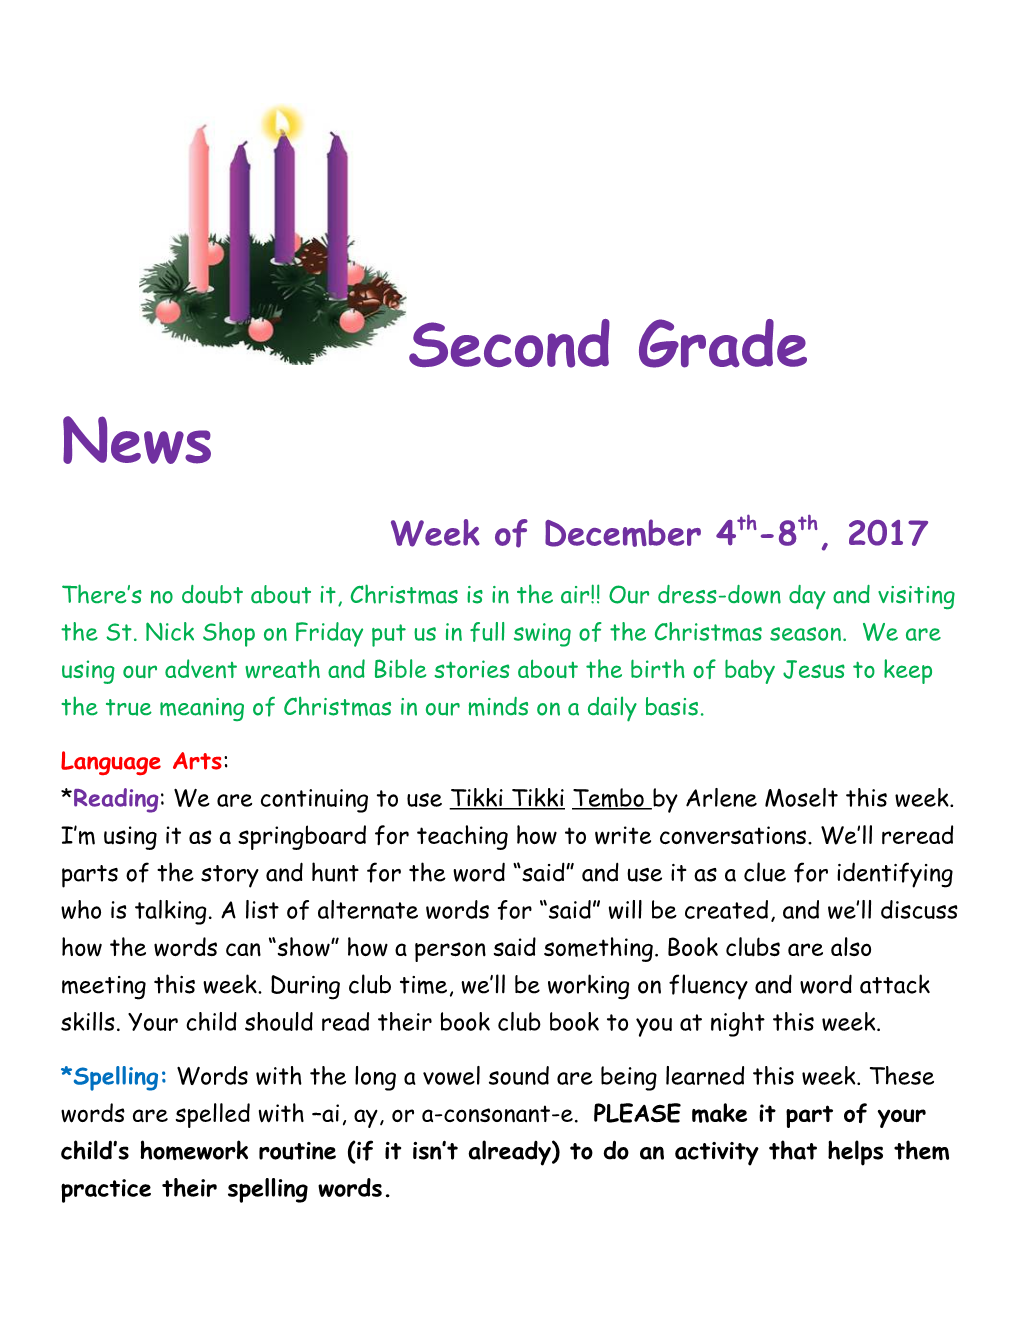 Second Grade News